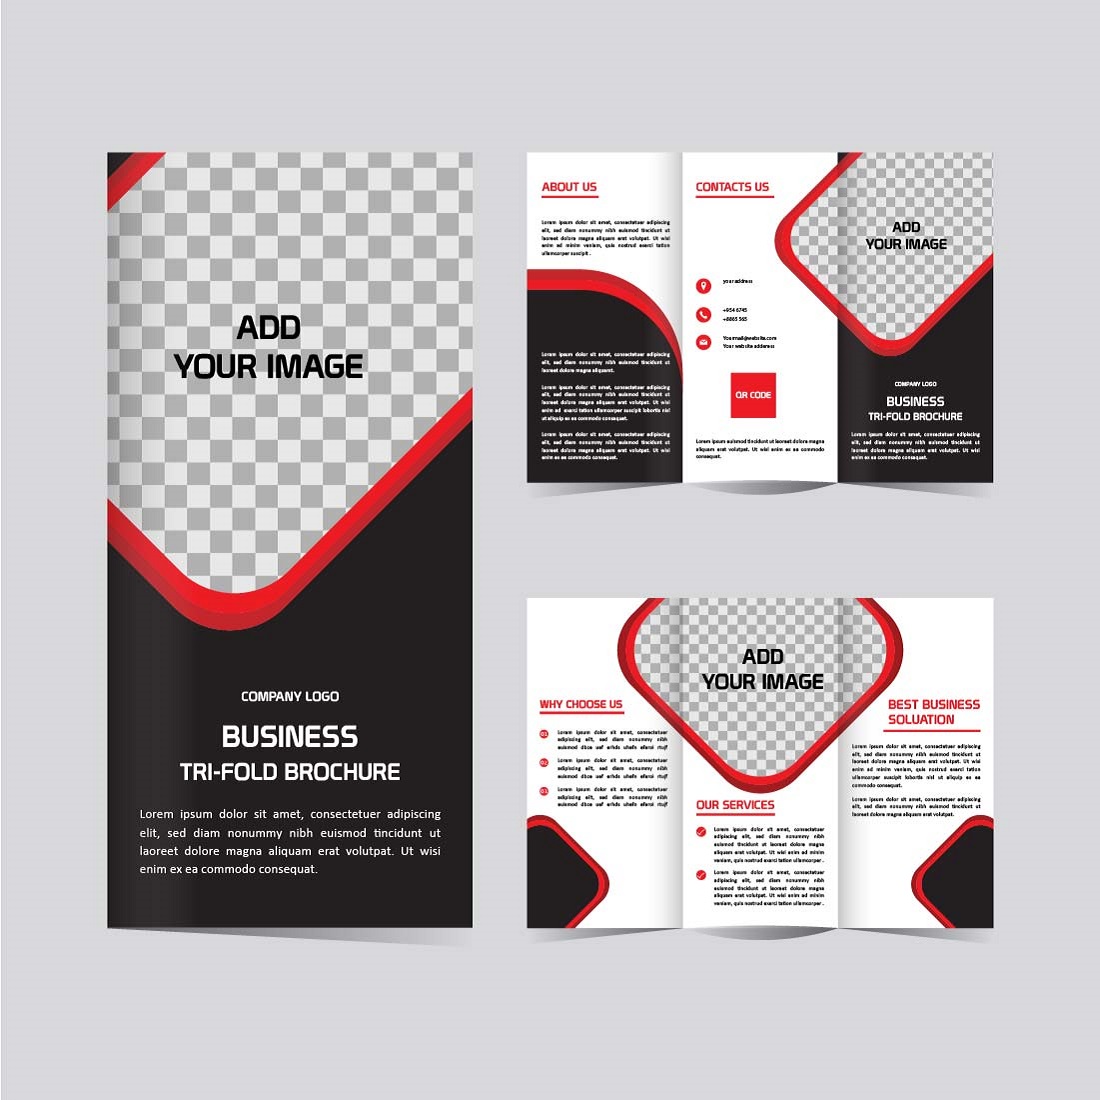 Modern Business Tri fold brochure template design cover image.